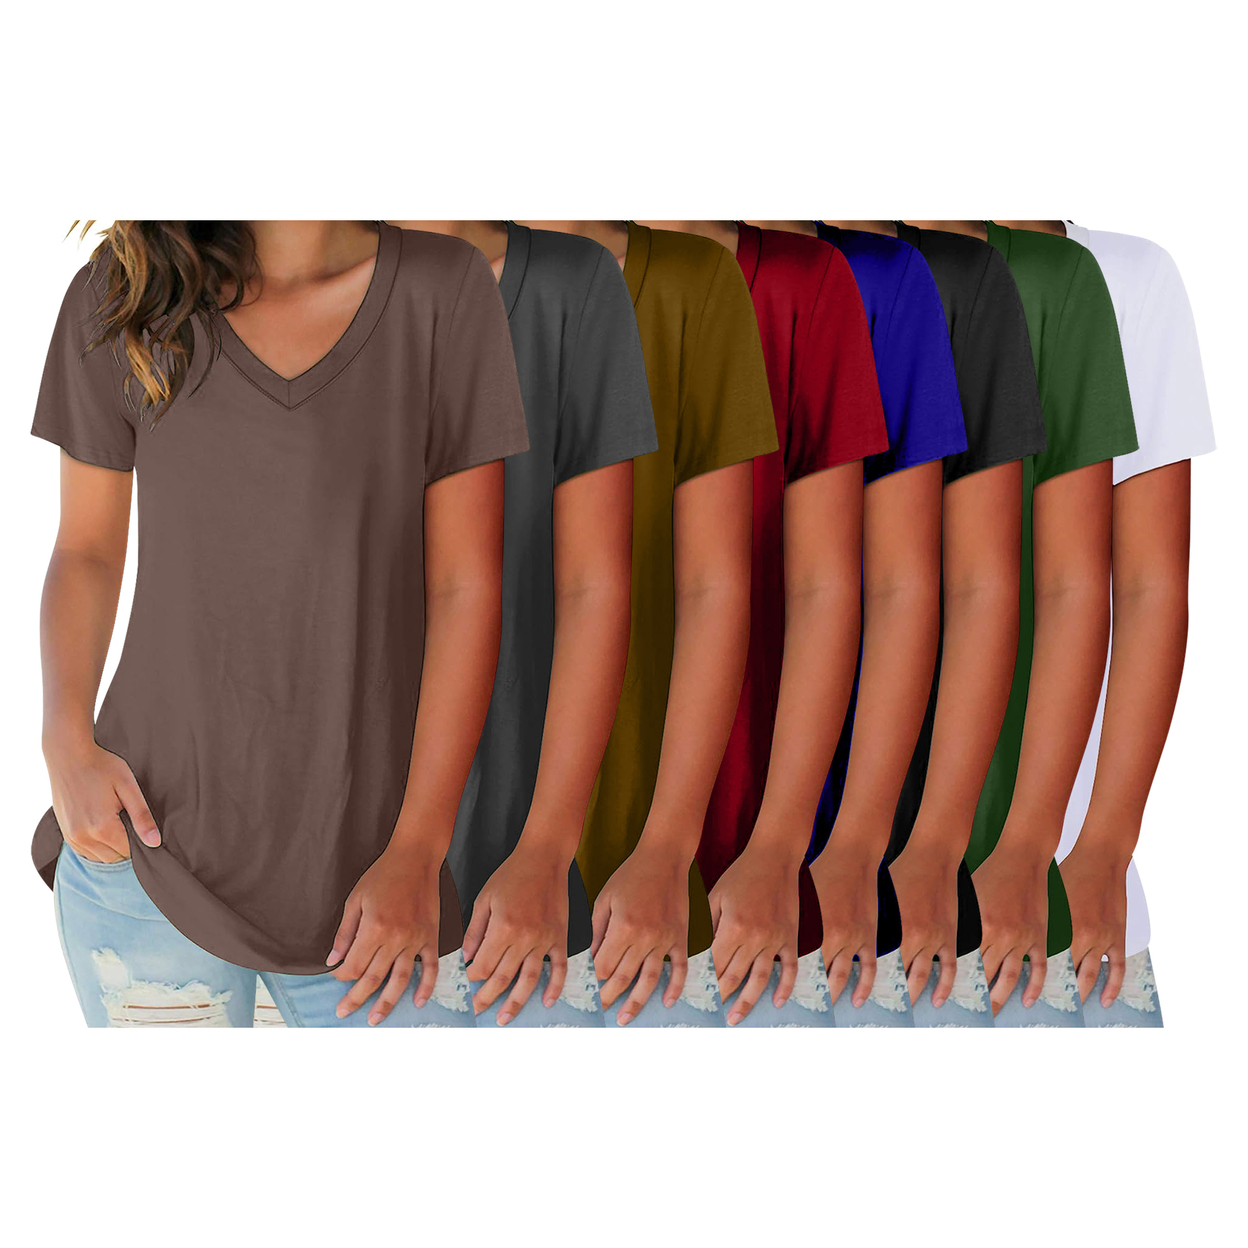 2-Pack: Women's Ultra Soft Smooth Cotton Blend Basic V-Neck Short Sleeve Shirts - Navy & Green, Xx-large